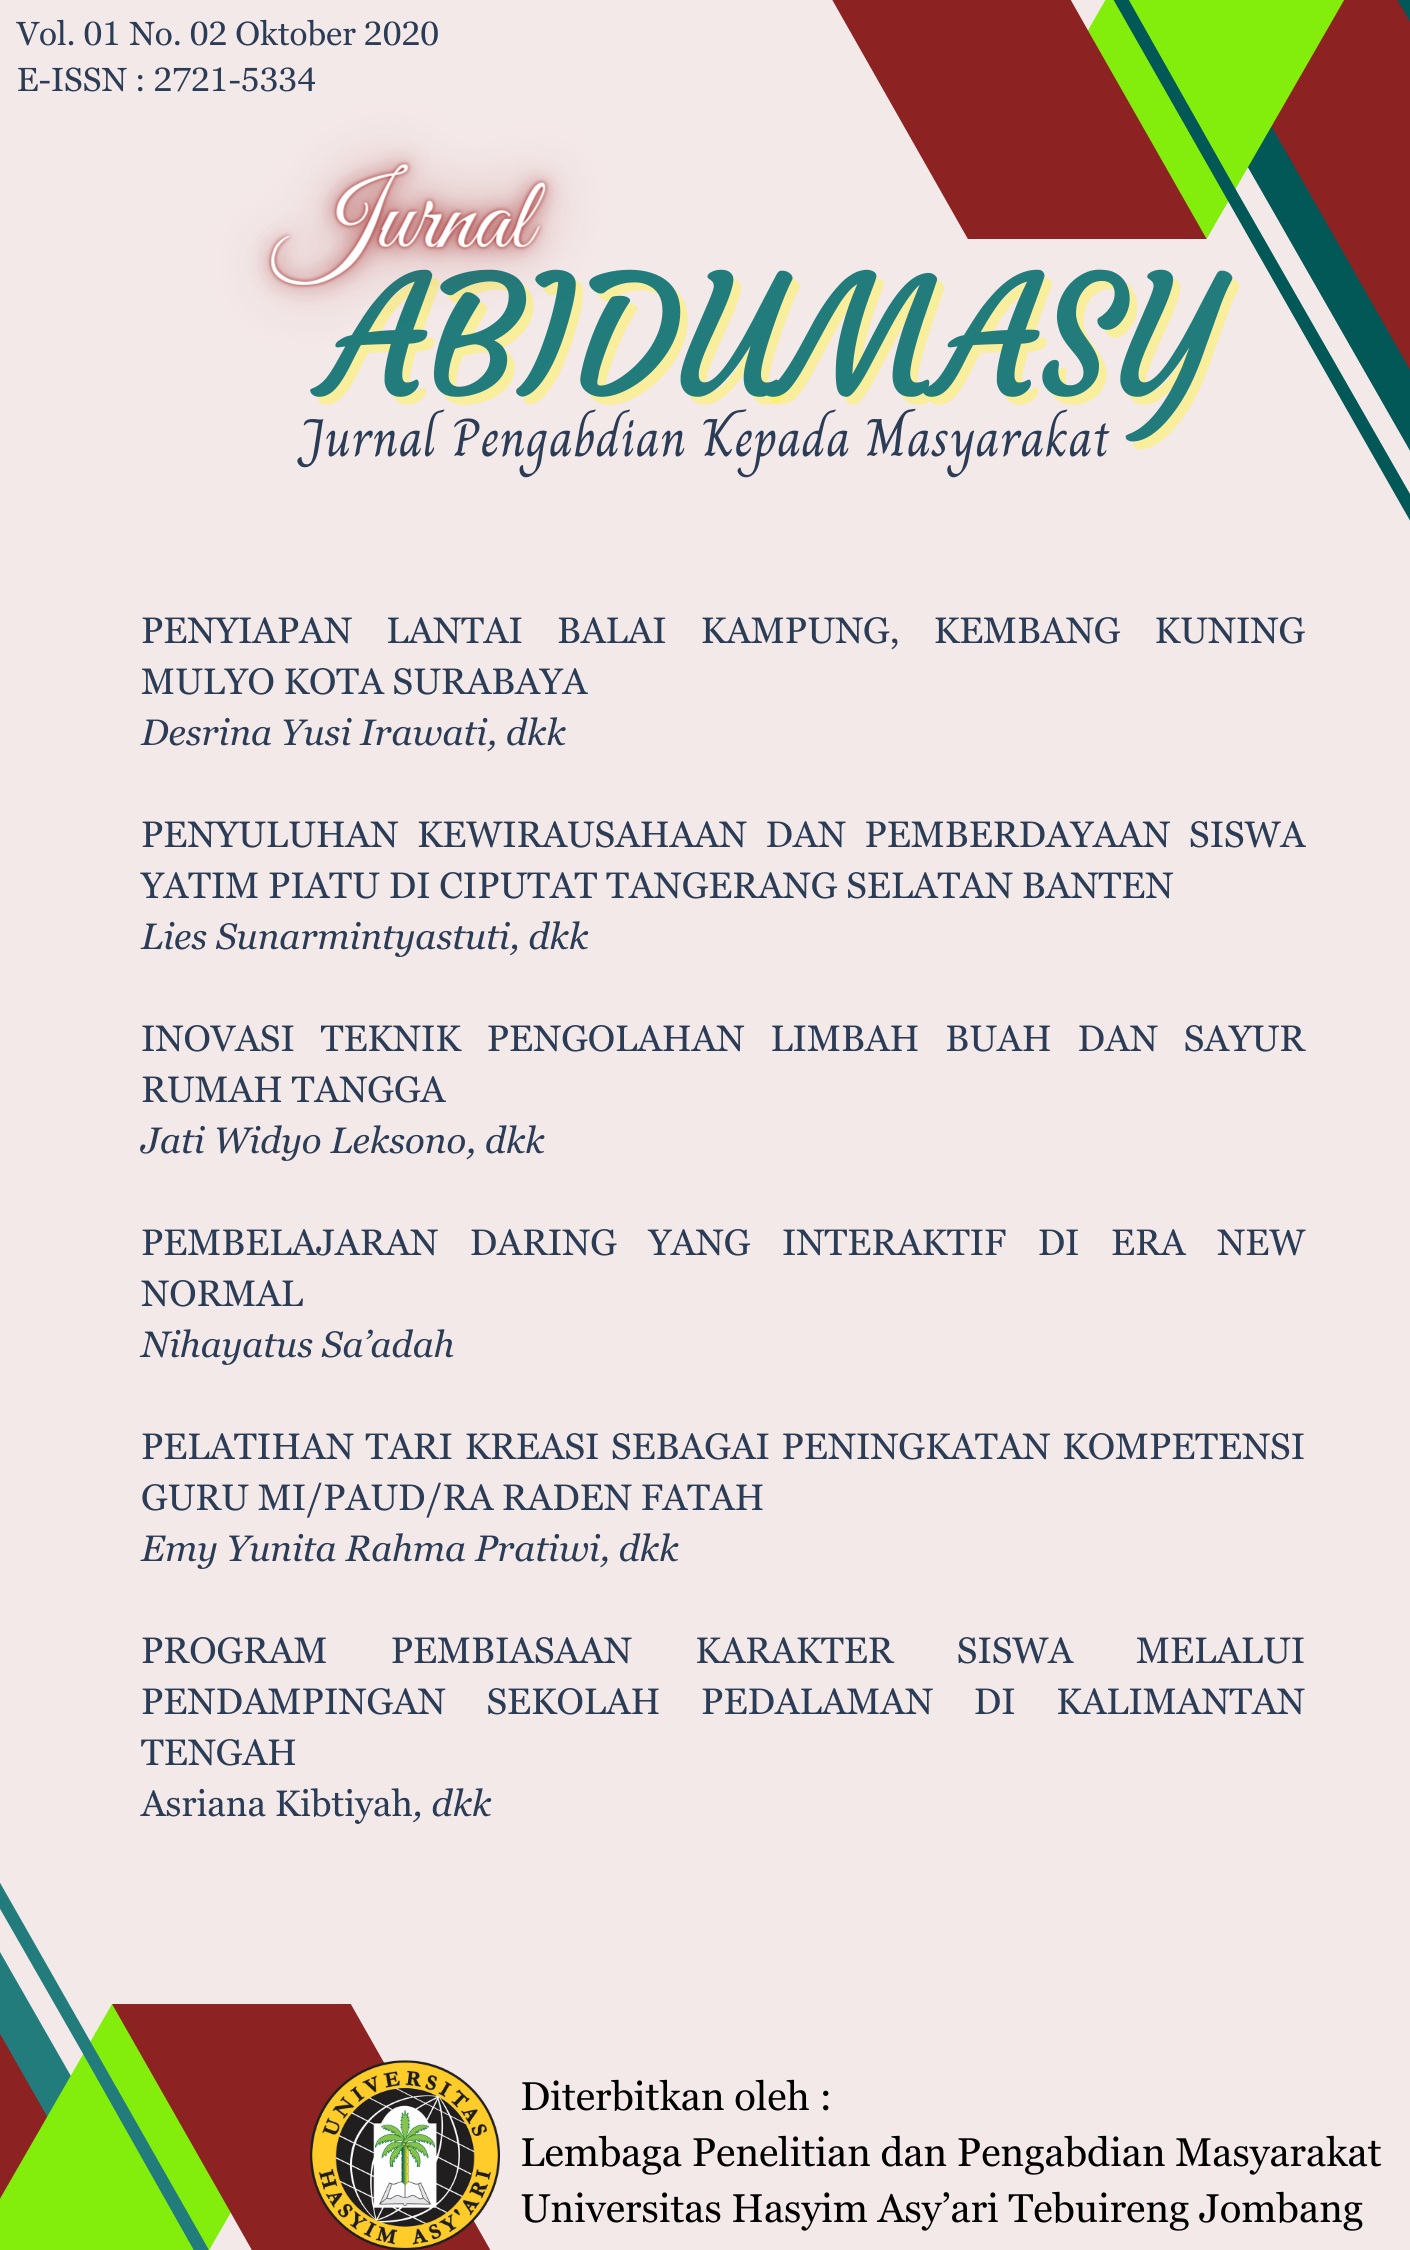 					View Vol. 1 No. 2 (2020): ABIDUMASY : JURNAL PENGABDIAN KEPADA MASYARAKAT
				